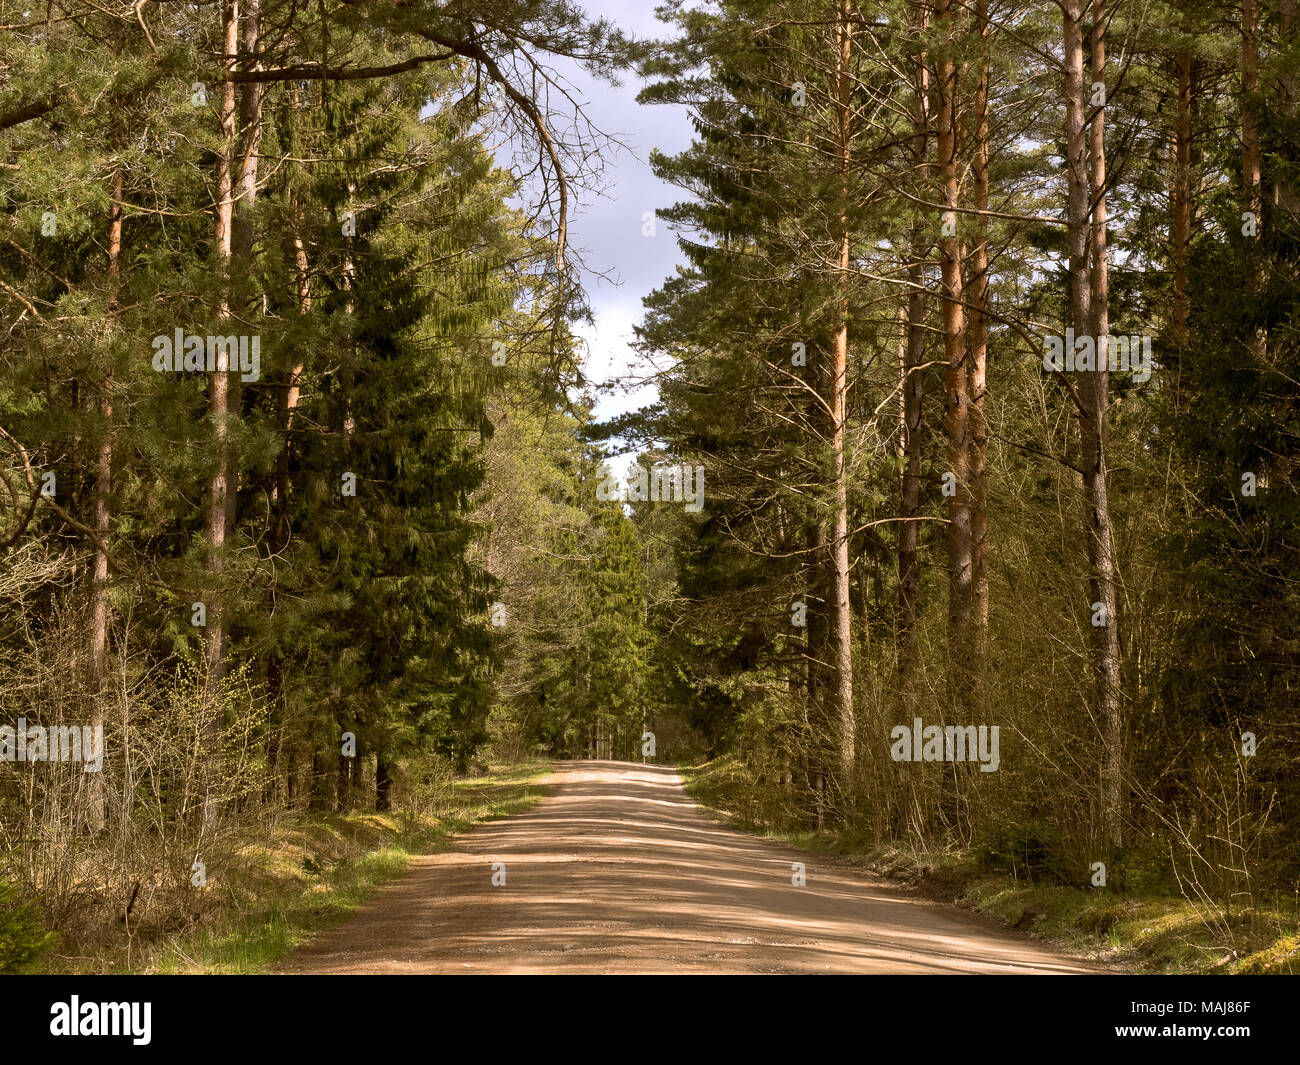 La carretera en un denso bosque, bosque denso, la espesura del bosque verde Foto de stock